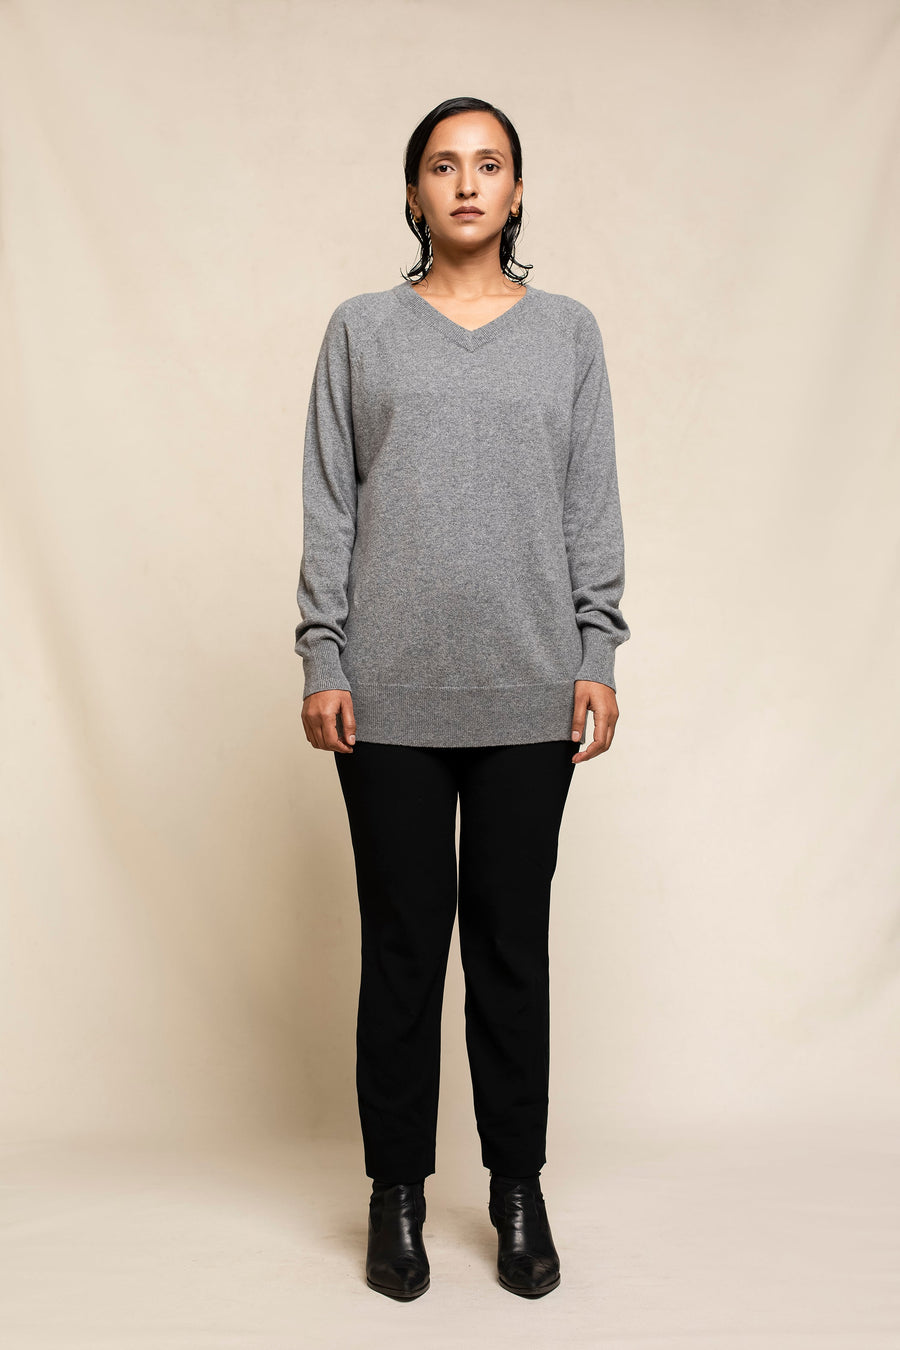 Unisex V-Neck Sweater